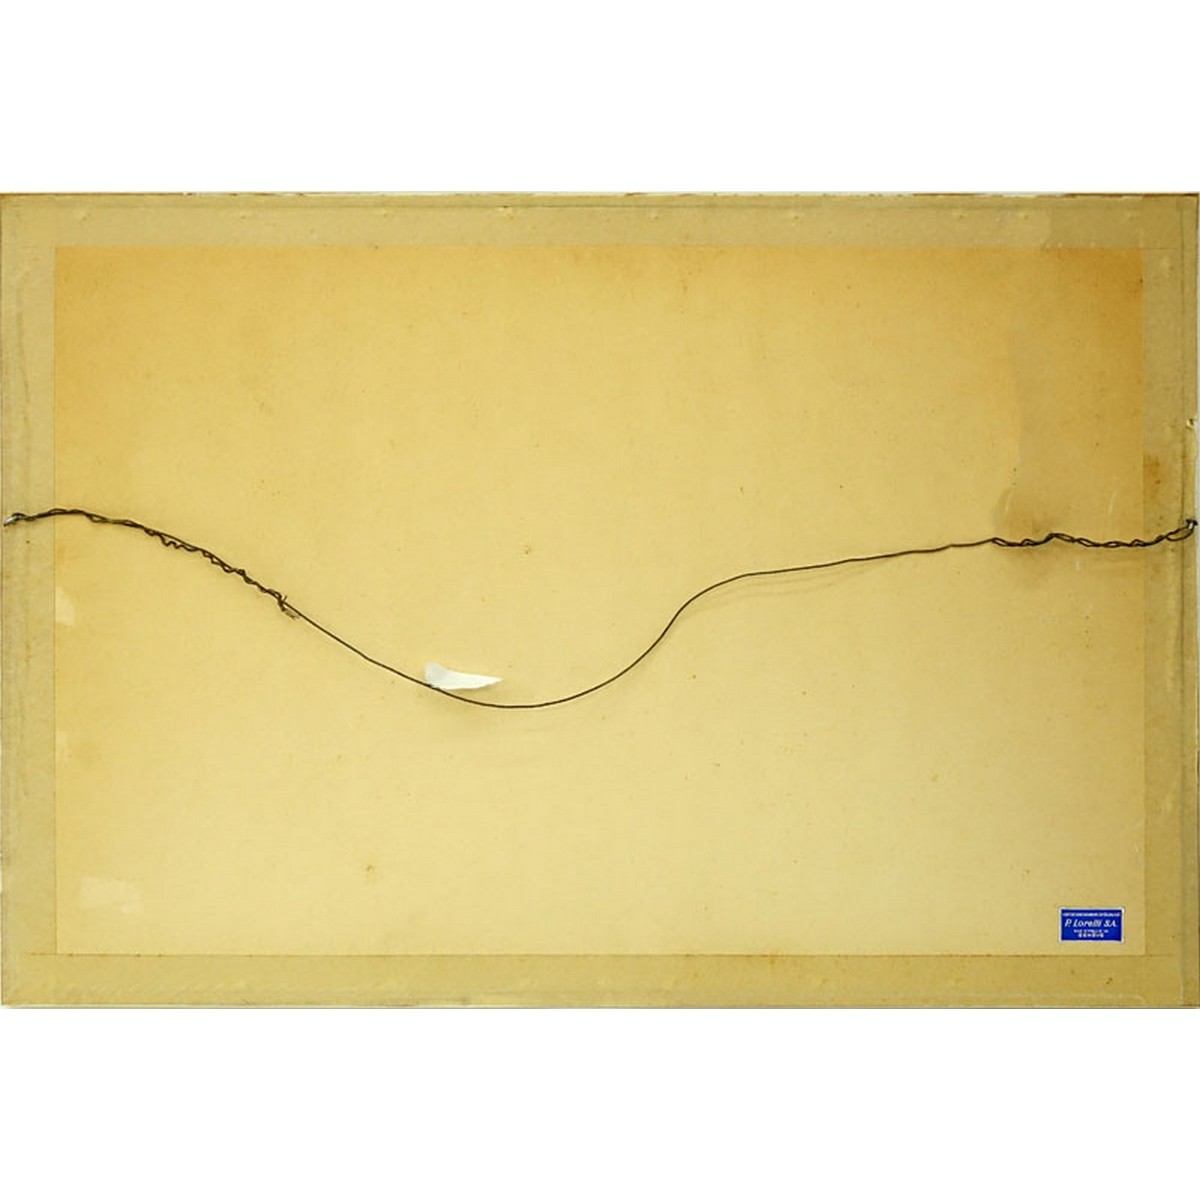 Kurt Von Ballmoos, Swiss/German (1934 - 2016) Gouache on Paper, Untitled Abstract Scene, Signed Lower Right. Artist information attached en verso.